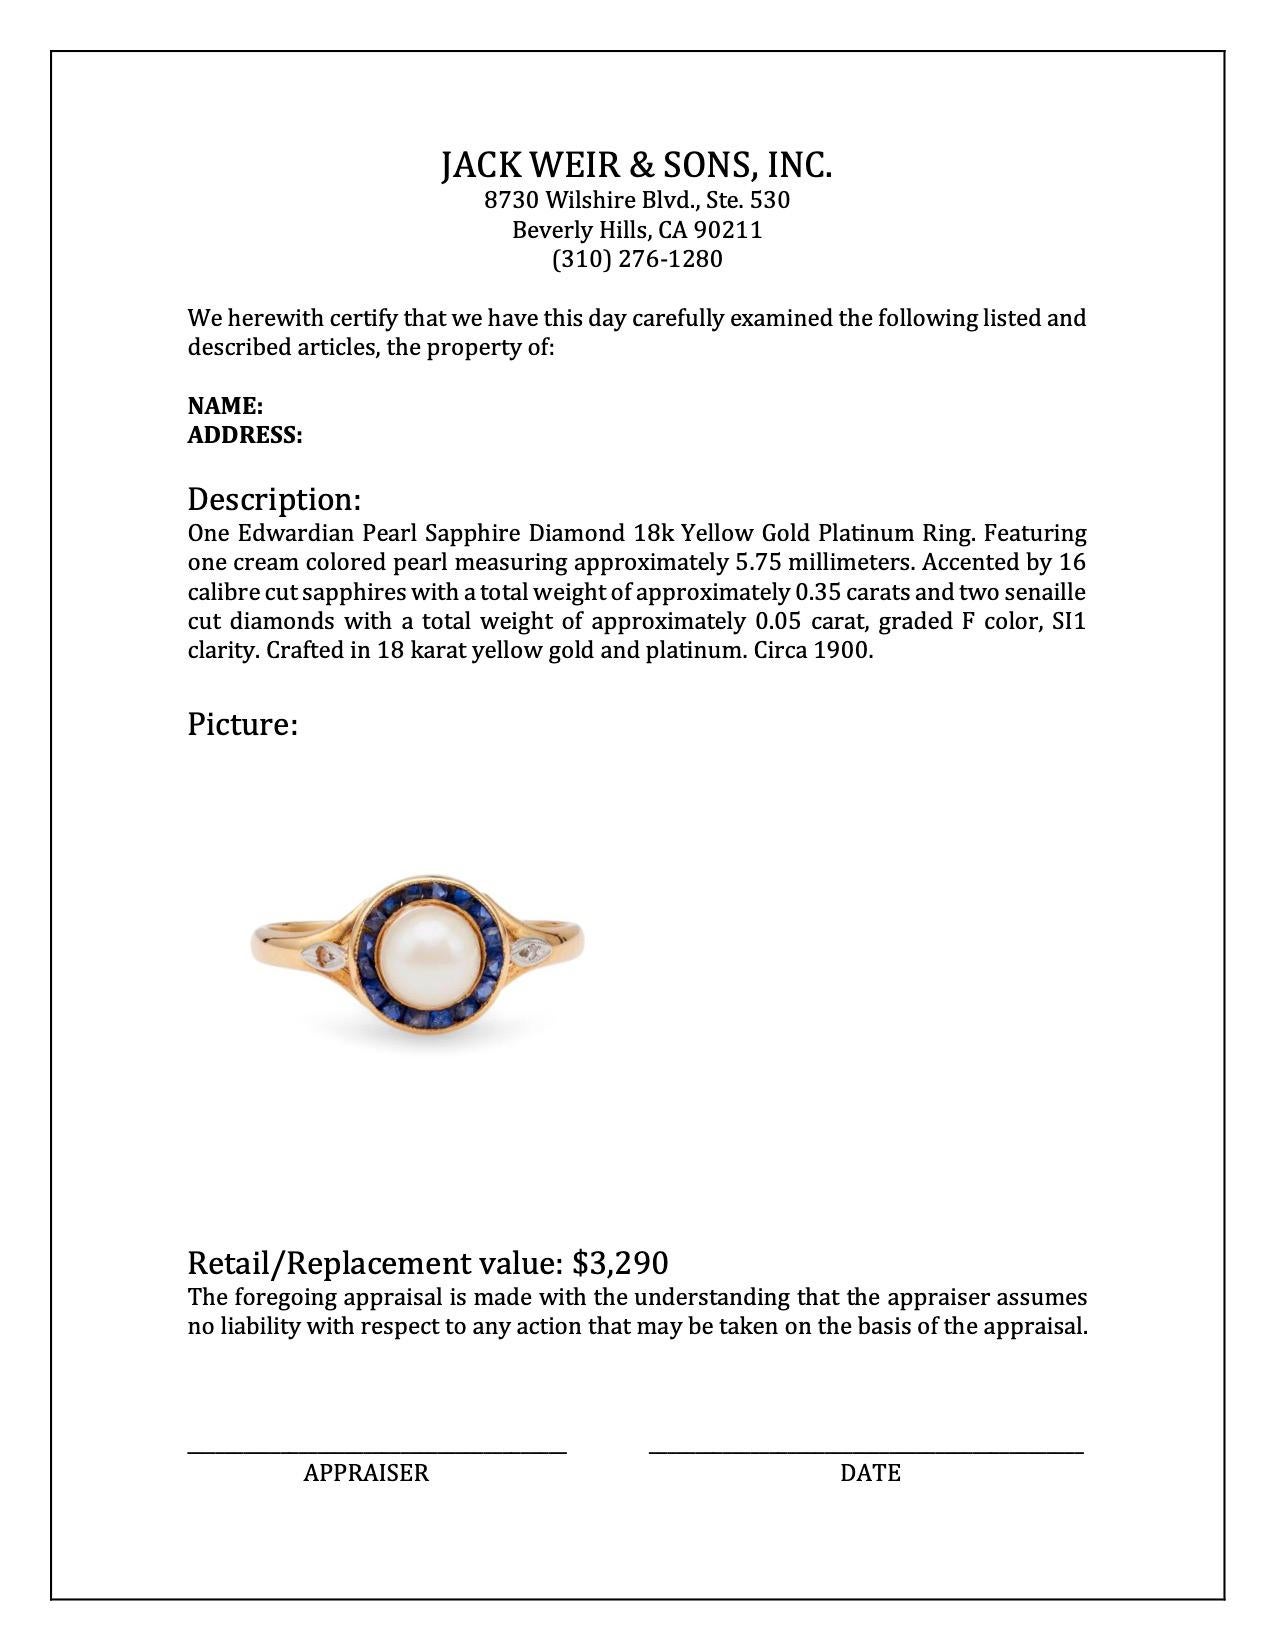 Women's or Men's Edwardian Pearl Sapphire Diamond 18k Yellow Gold Platinum Ring For Sale